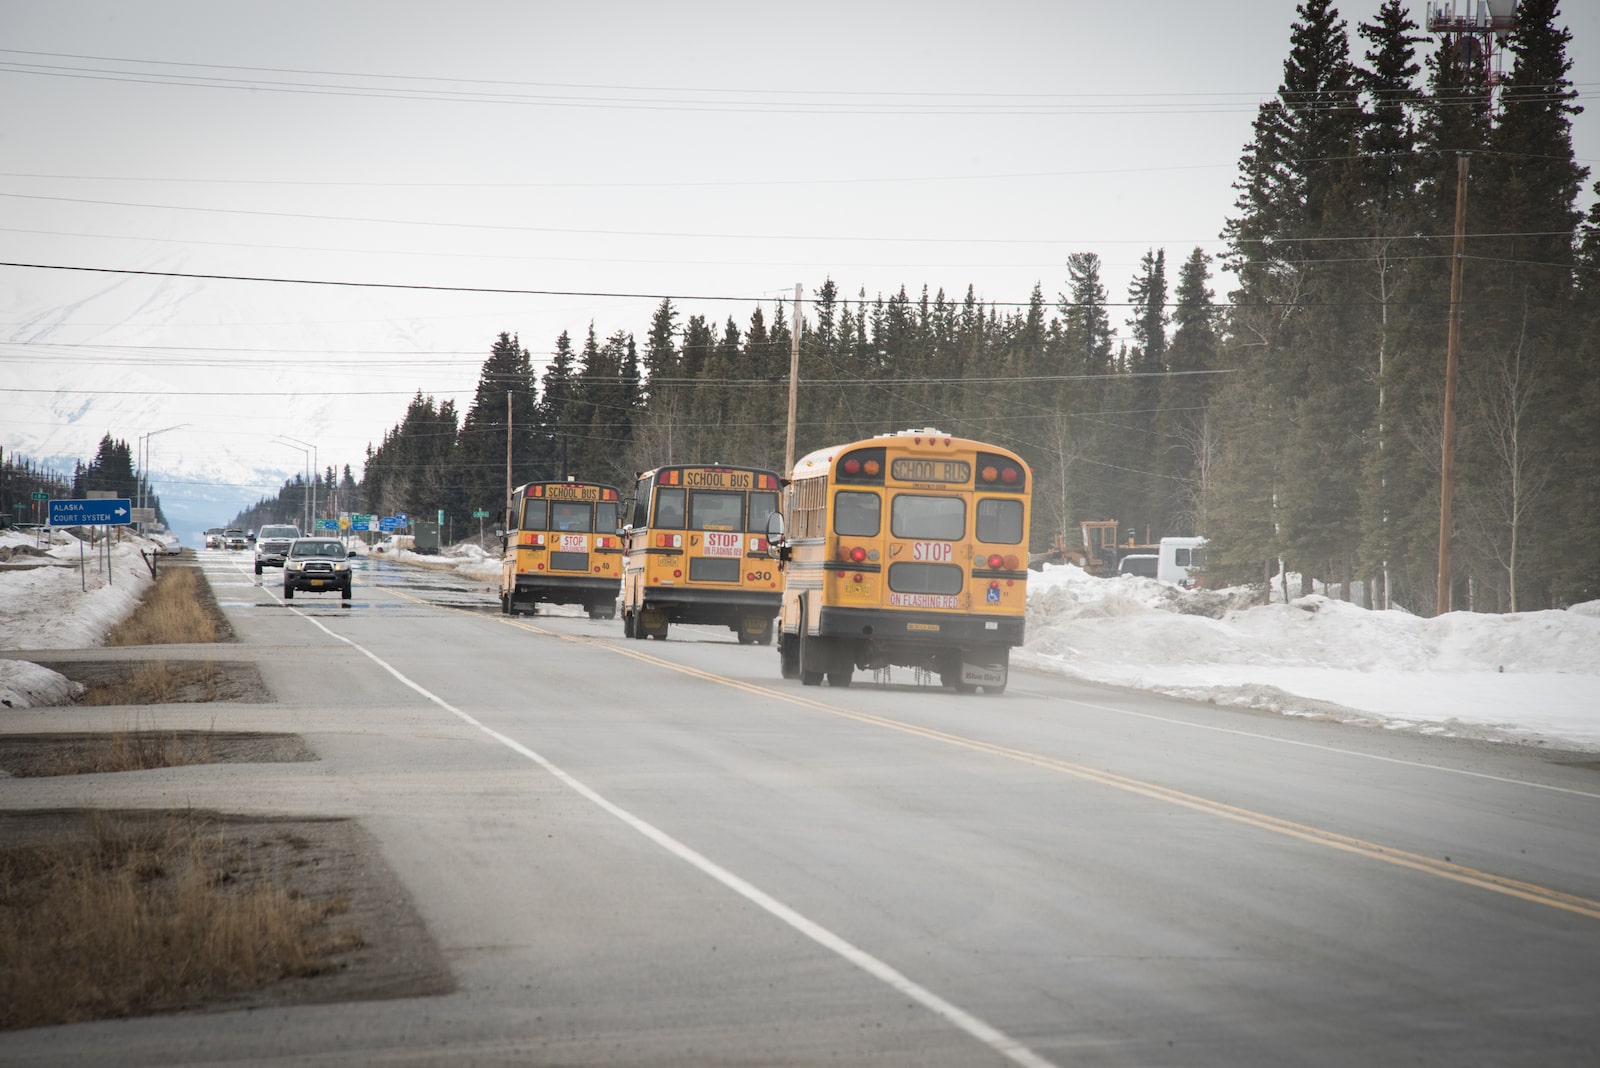 three schoolbuses on a snowy road